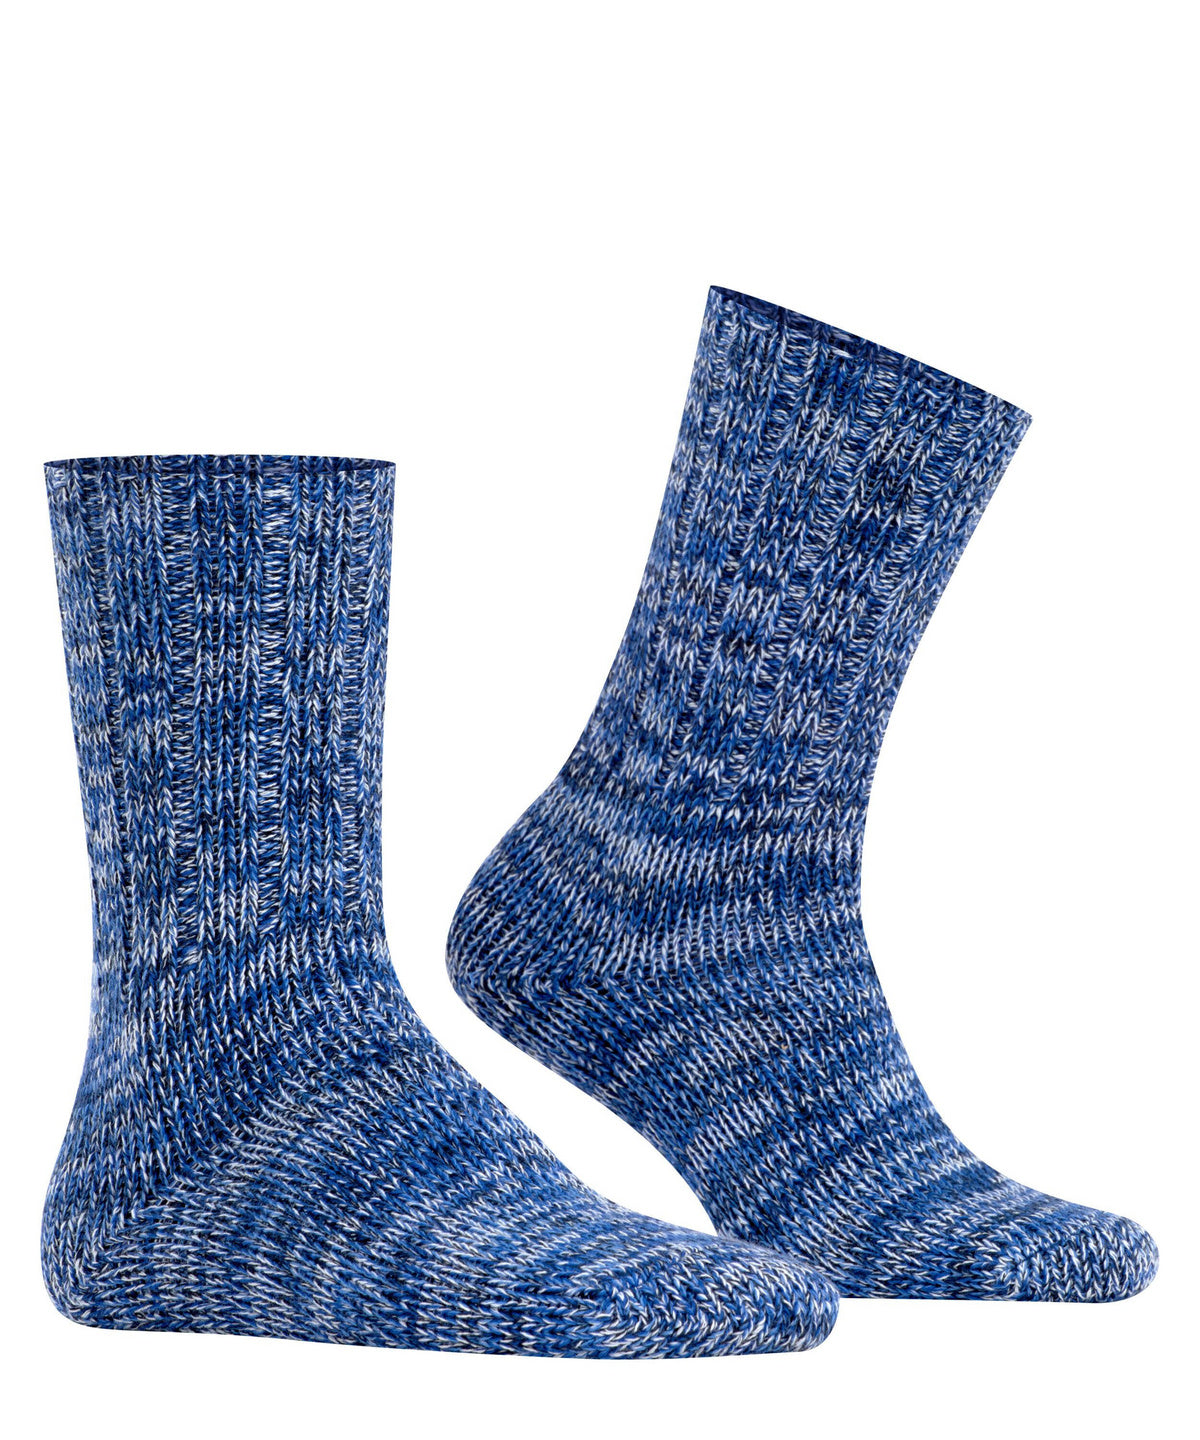 Cobalt Brooklyn socks by Falke